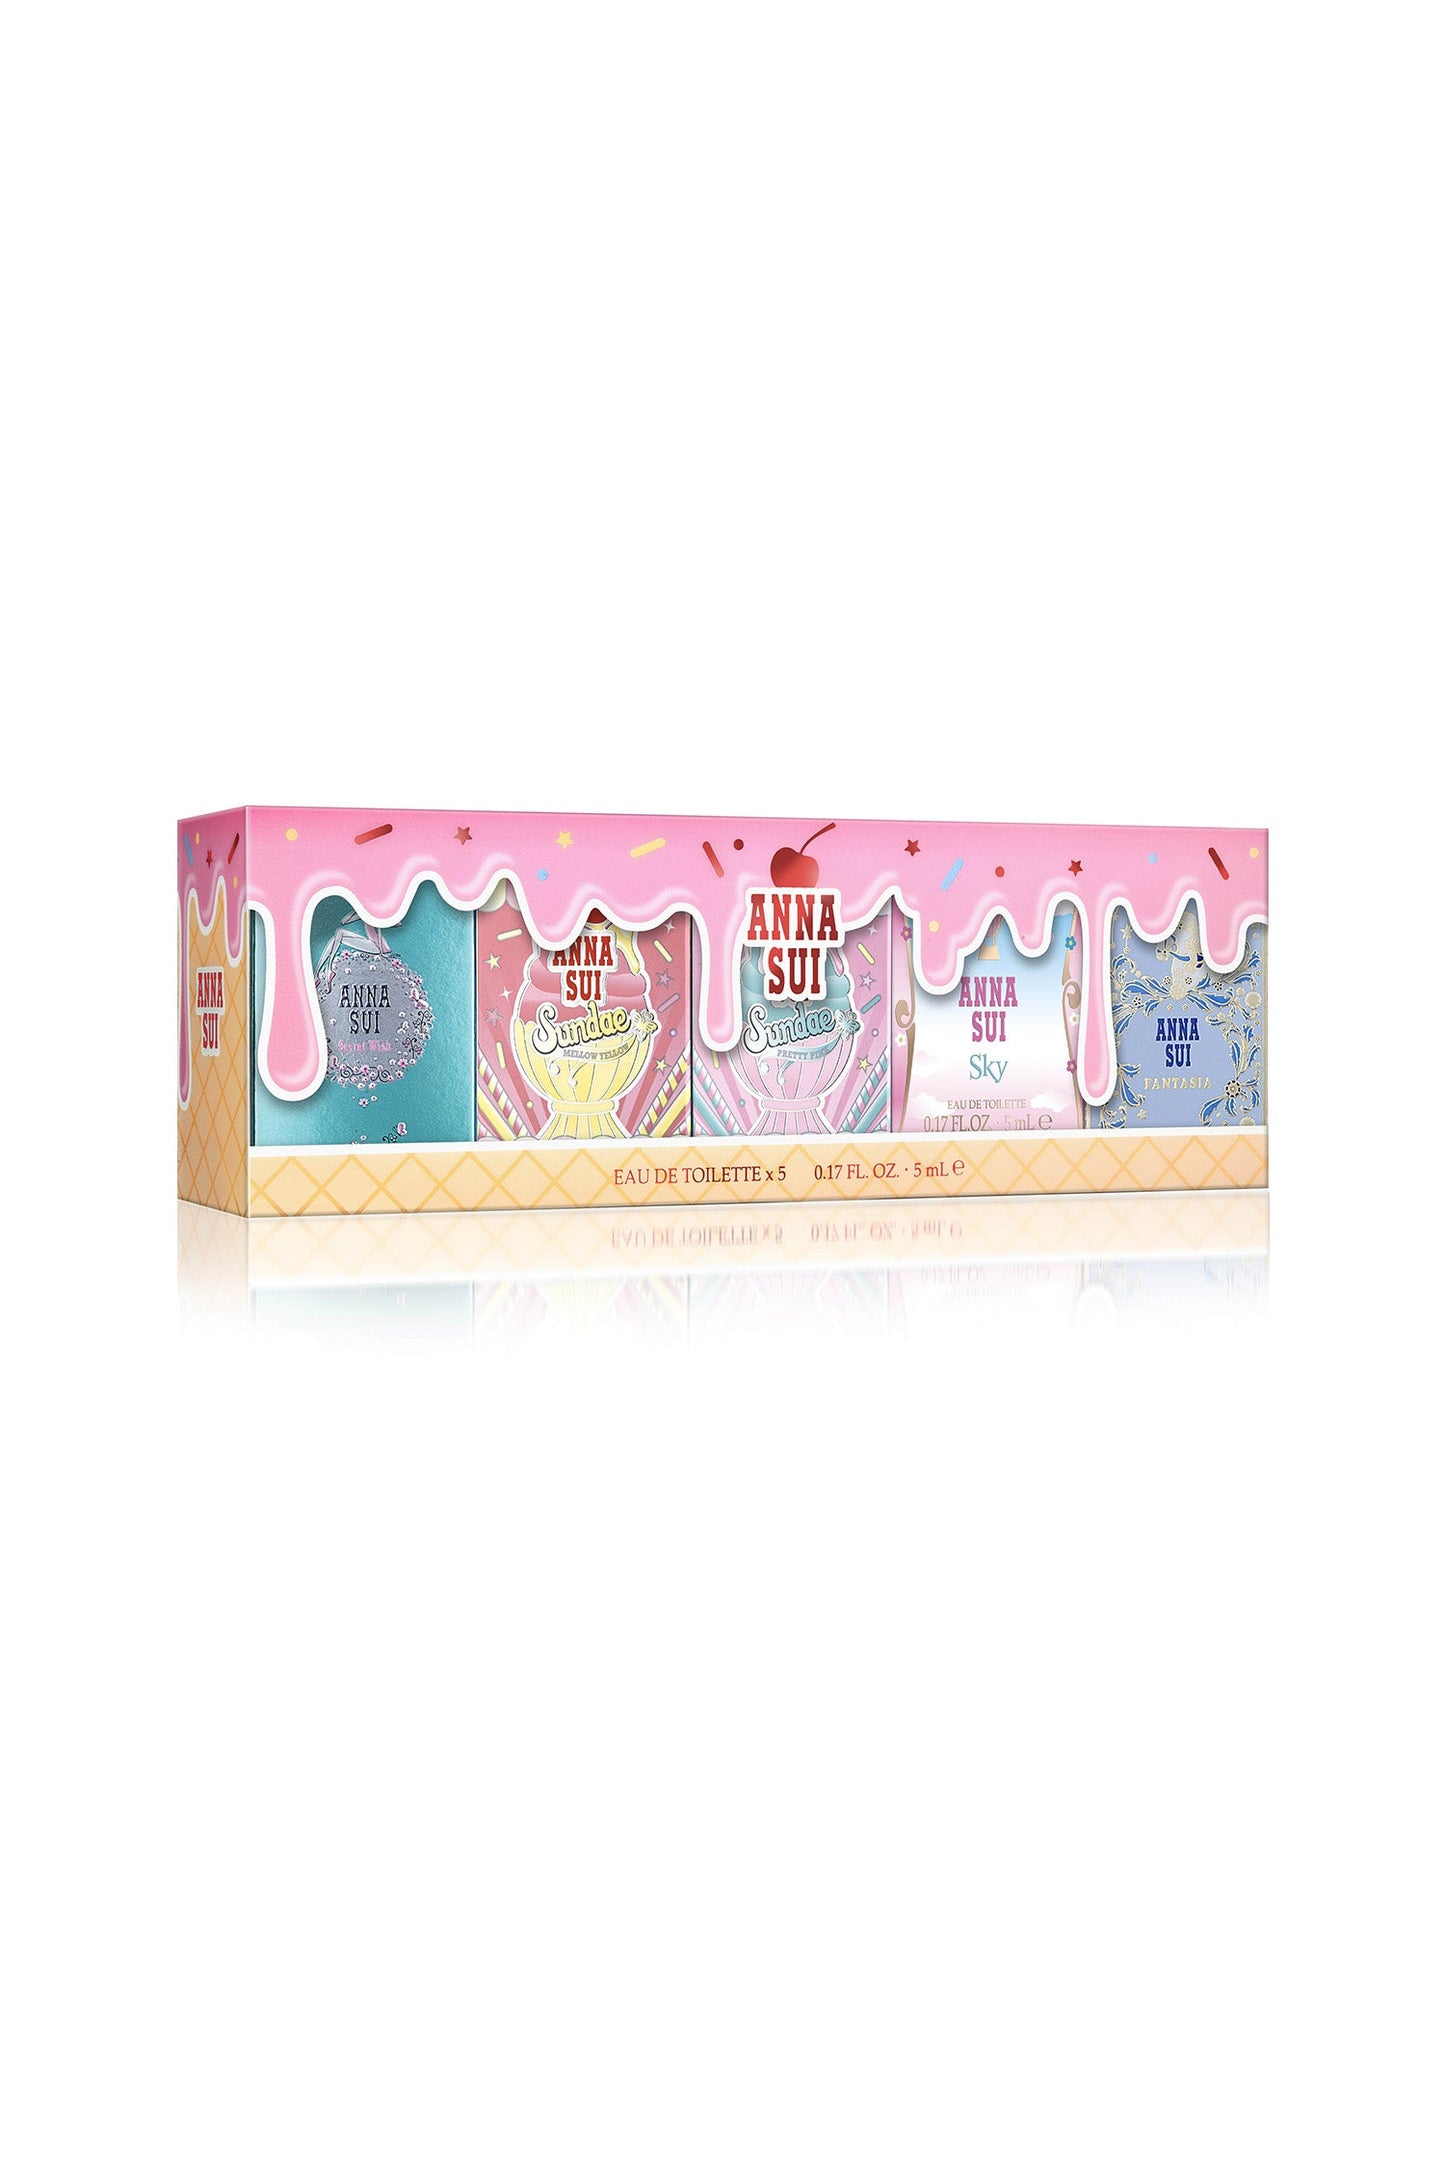 5 miniatures box with Fantasia, Sky, Sundae Pretty Pink, Sundae Yellow Mellow, Secret Wish